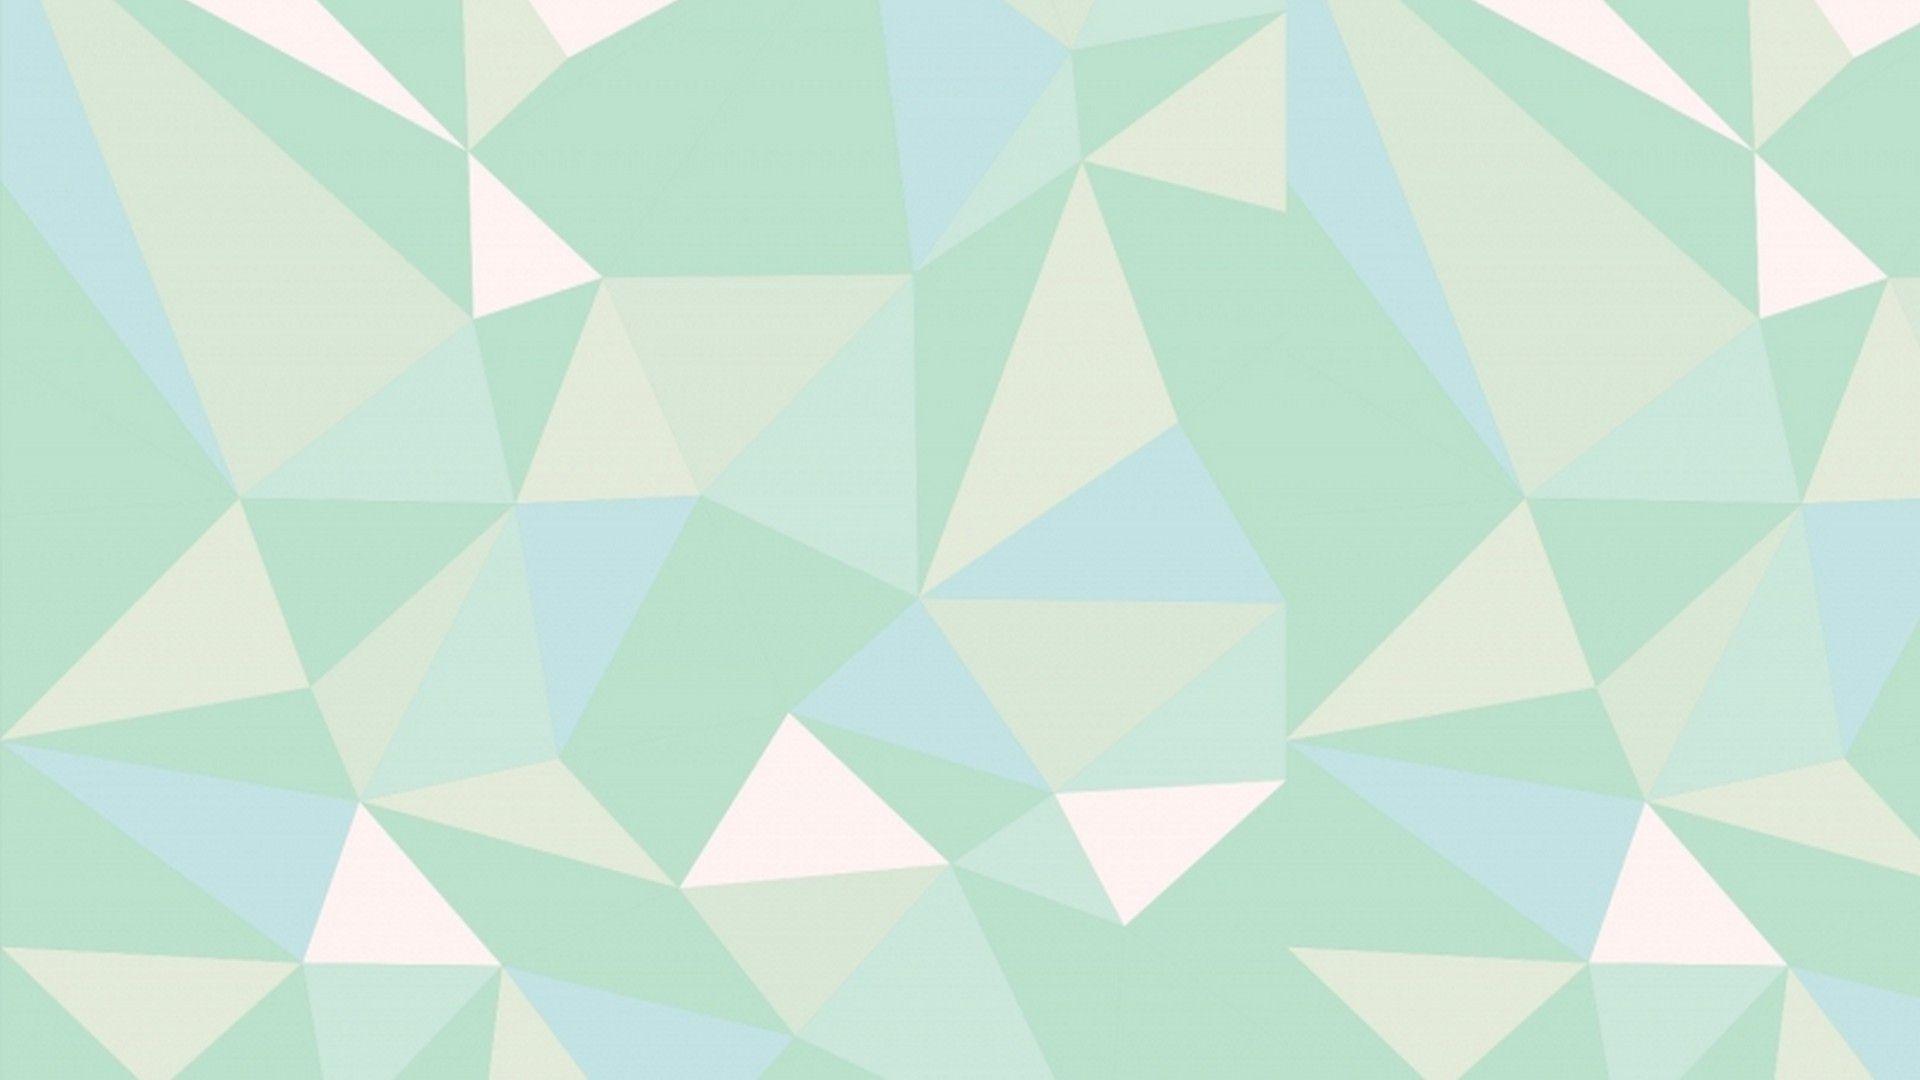 Mint Green Desktop Wallpapers - Top Free Mint Green Desktop Backgrounds